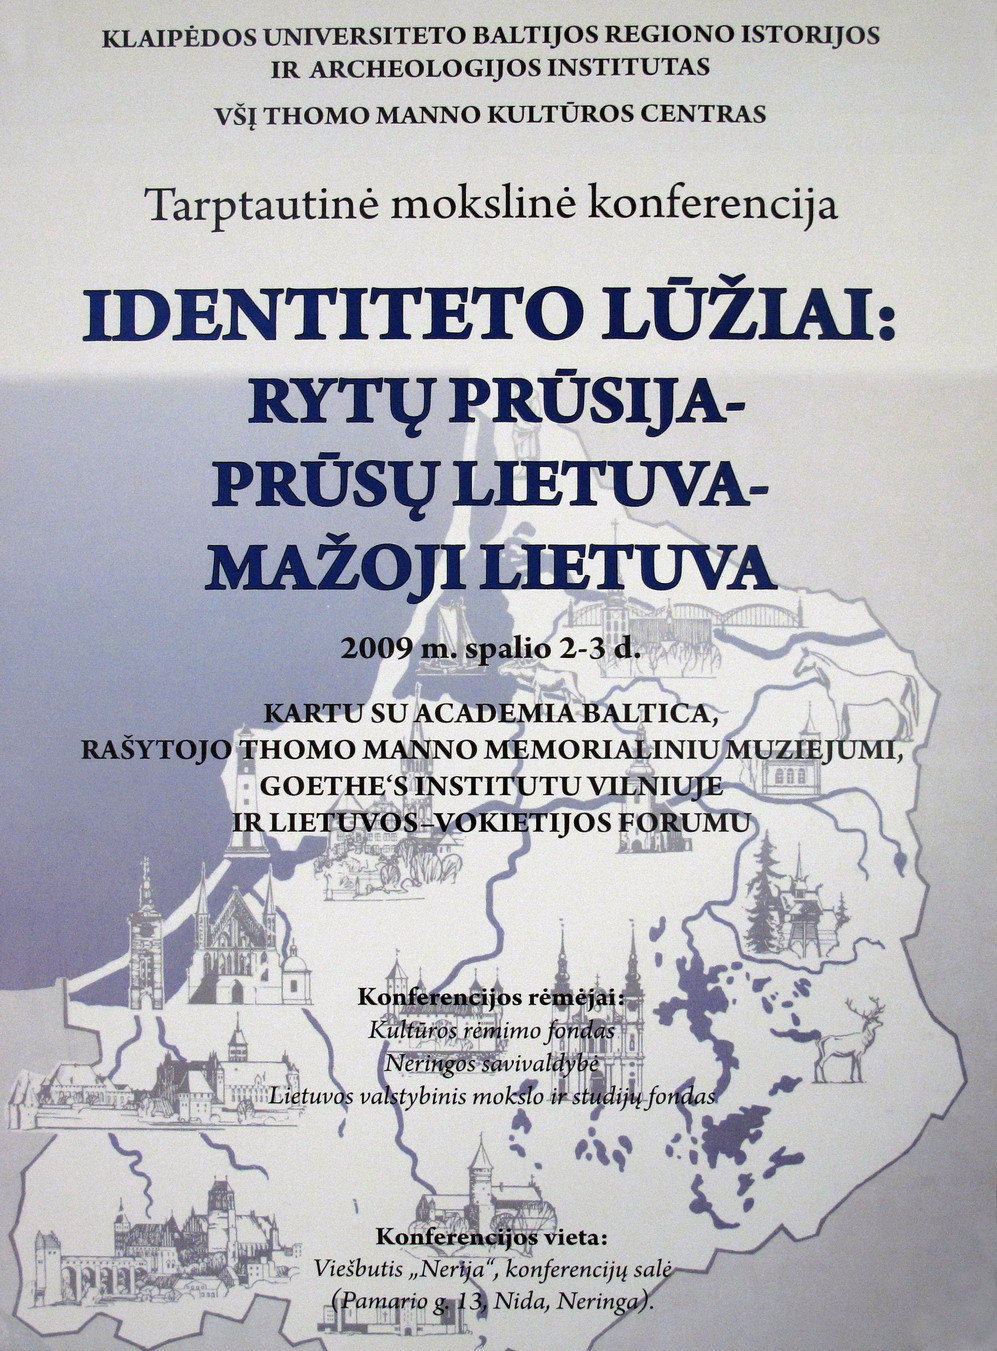 Konferencija-2009-Identiteto-luziai_resize.jpeg